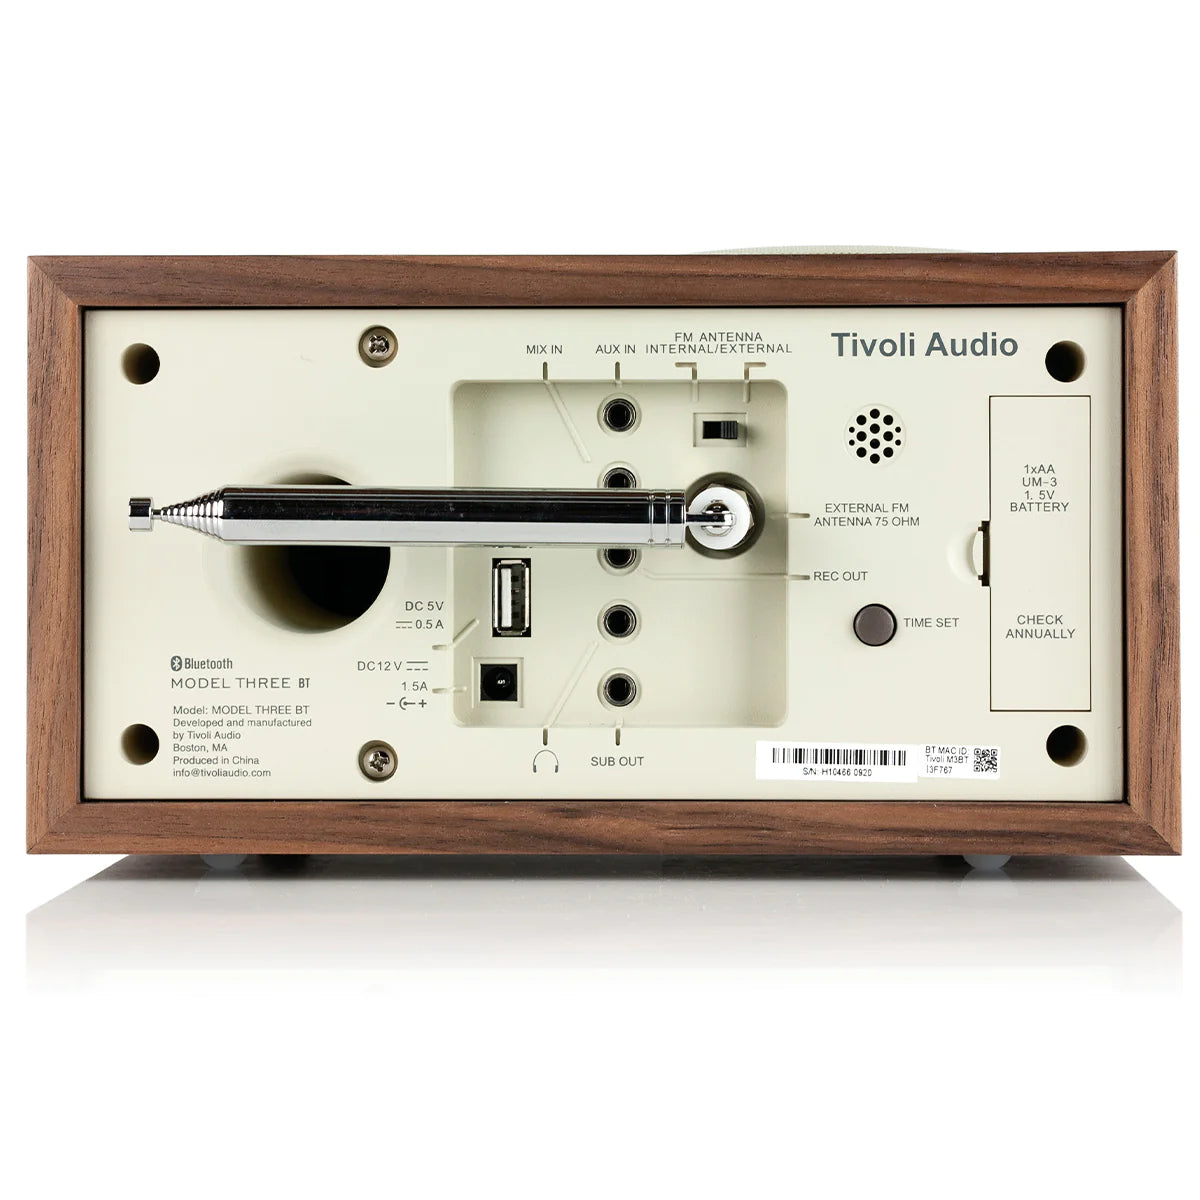 The Tivoli Audio Model Three BT blends classic design, superior sound and Bluetooth connectivity. Rear Walnut Taupe image